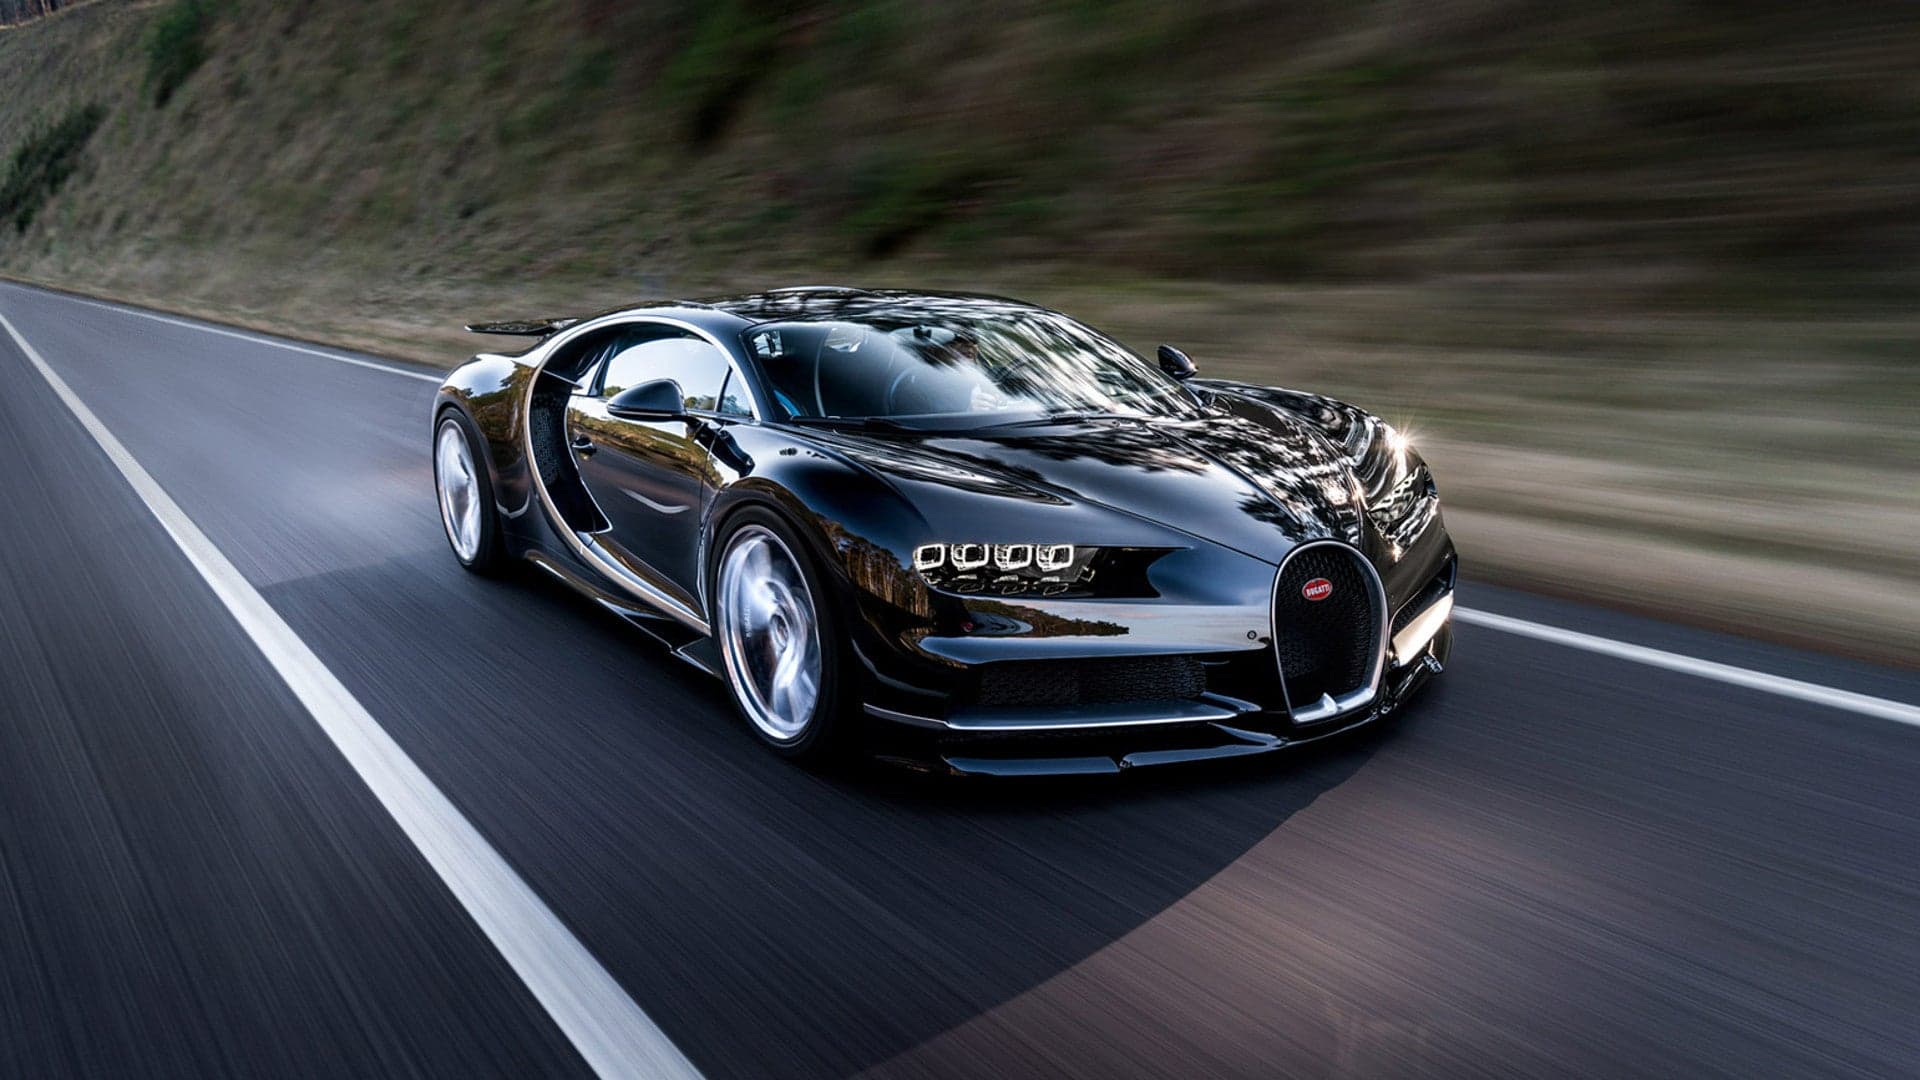 Top Speed Run ‘Not On the Agenda’ for Bugatti Chiron